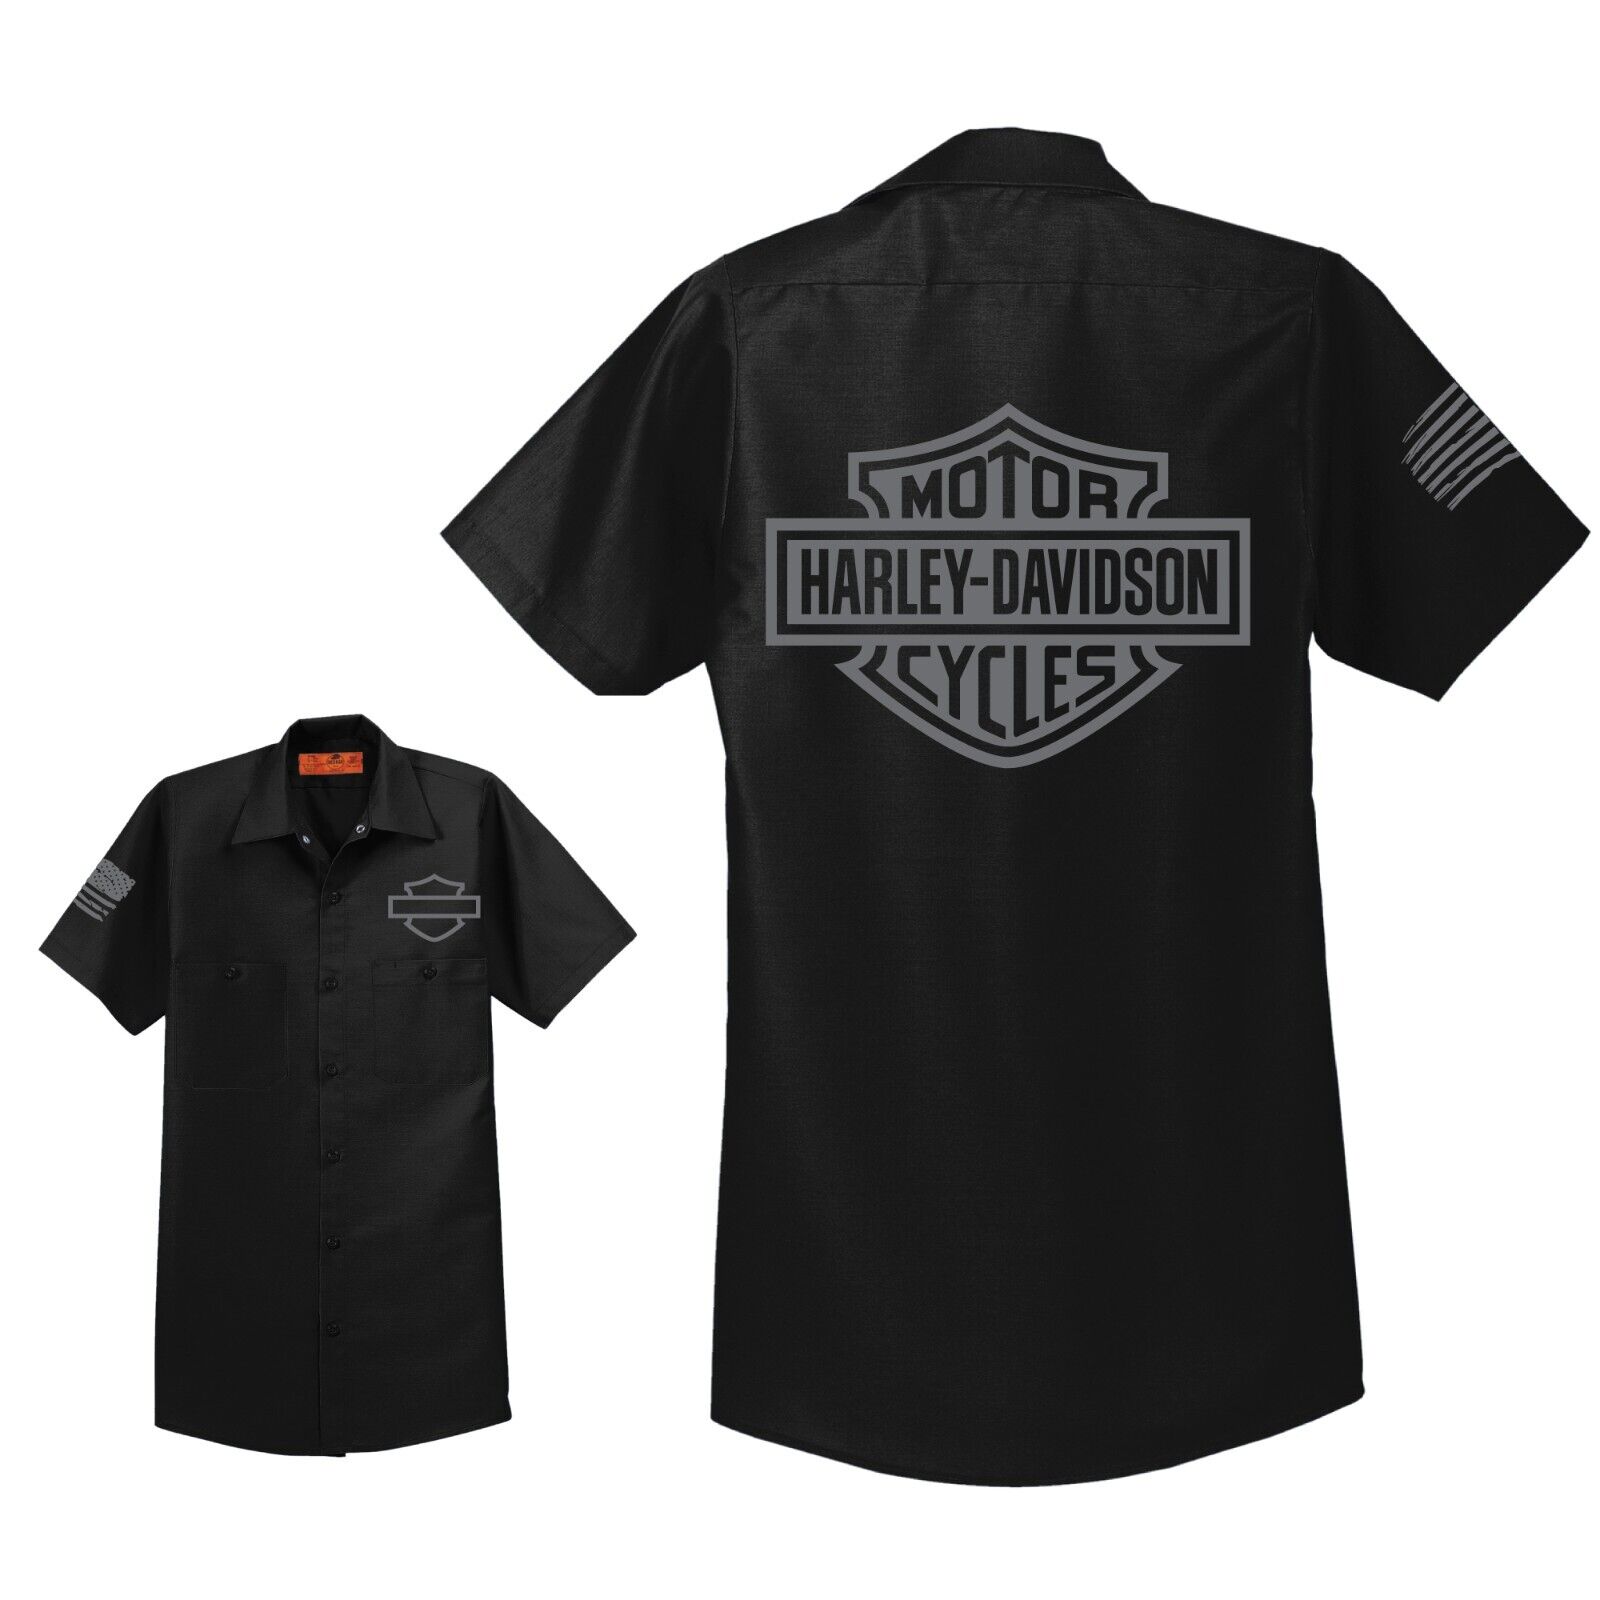 RED KAP Mechanic Shirt Motorcycle Biker Harley Davidson NWOT Bar and Shield Gift